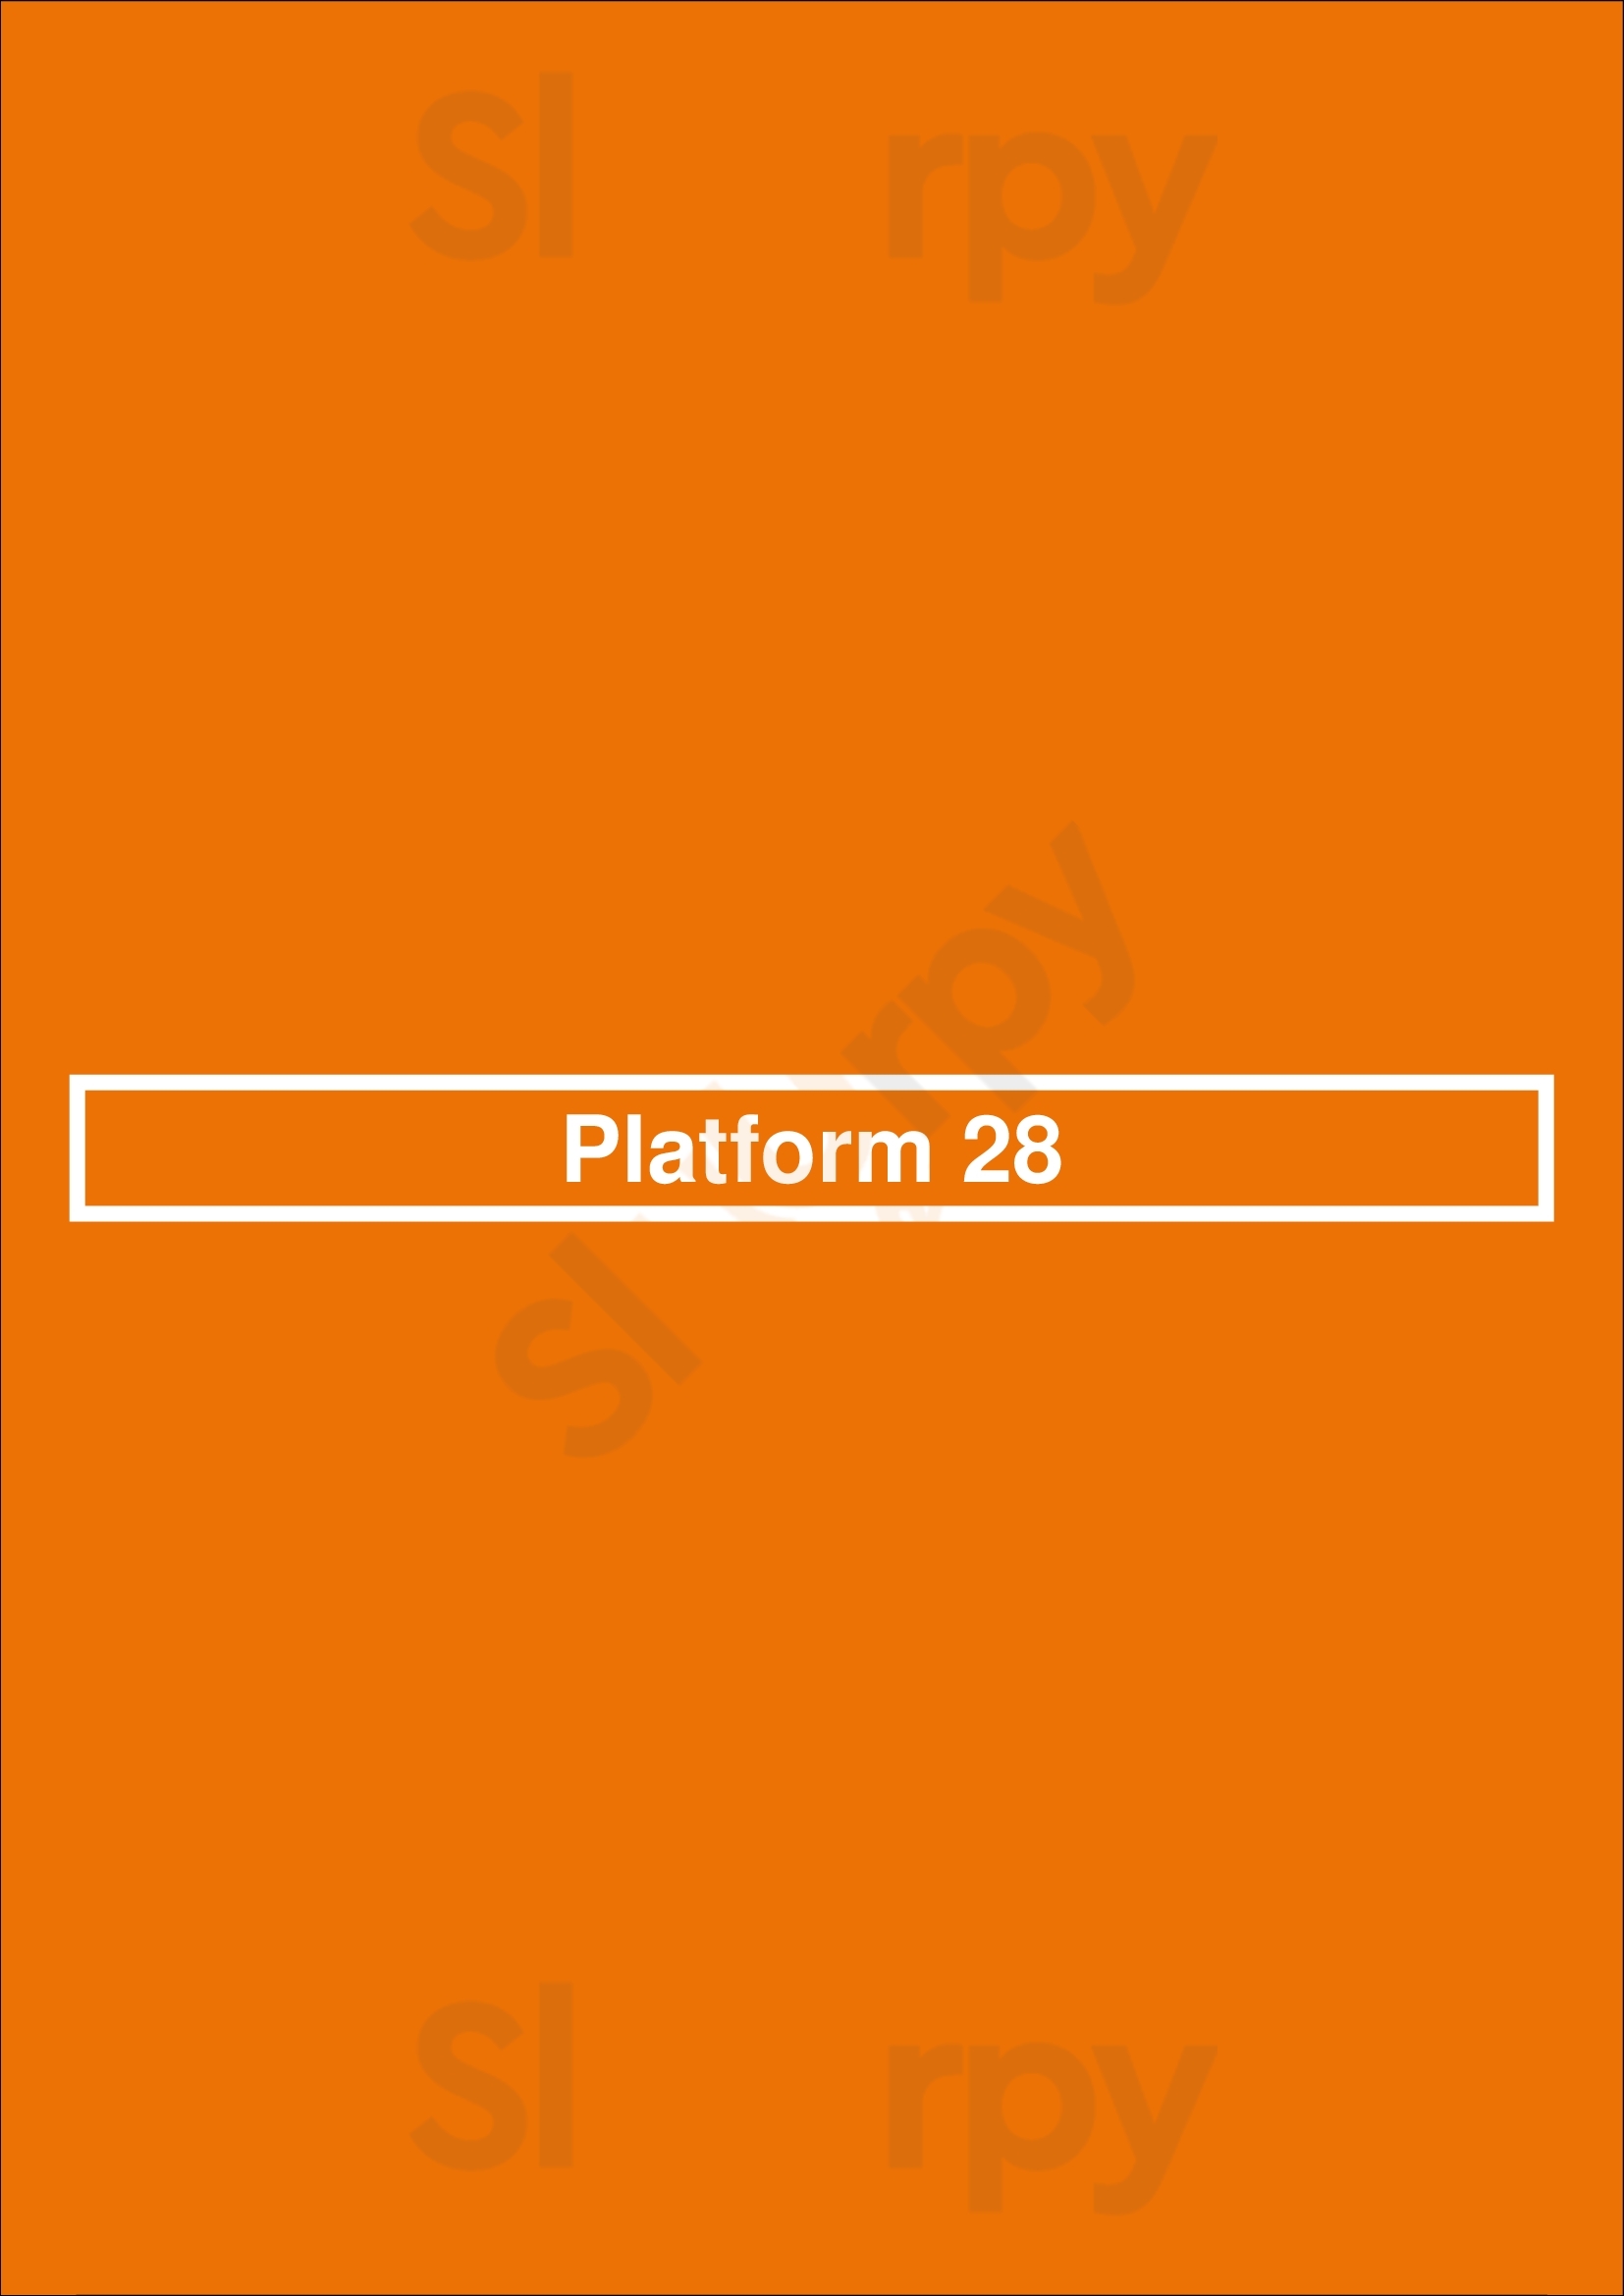 Platform 28 Melbourne Menu - 1